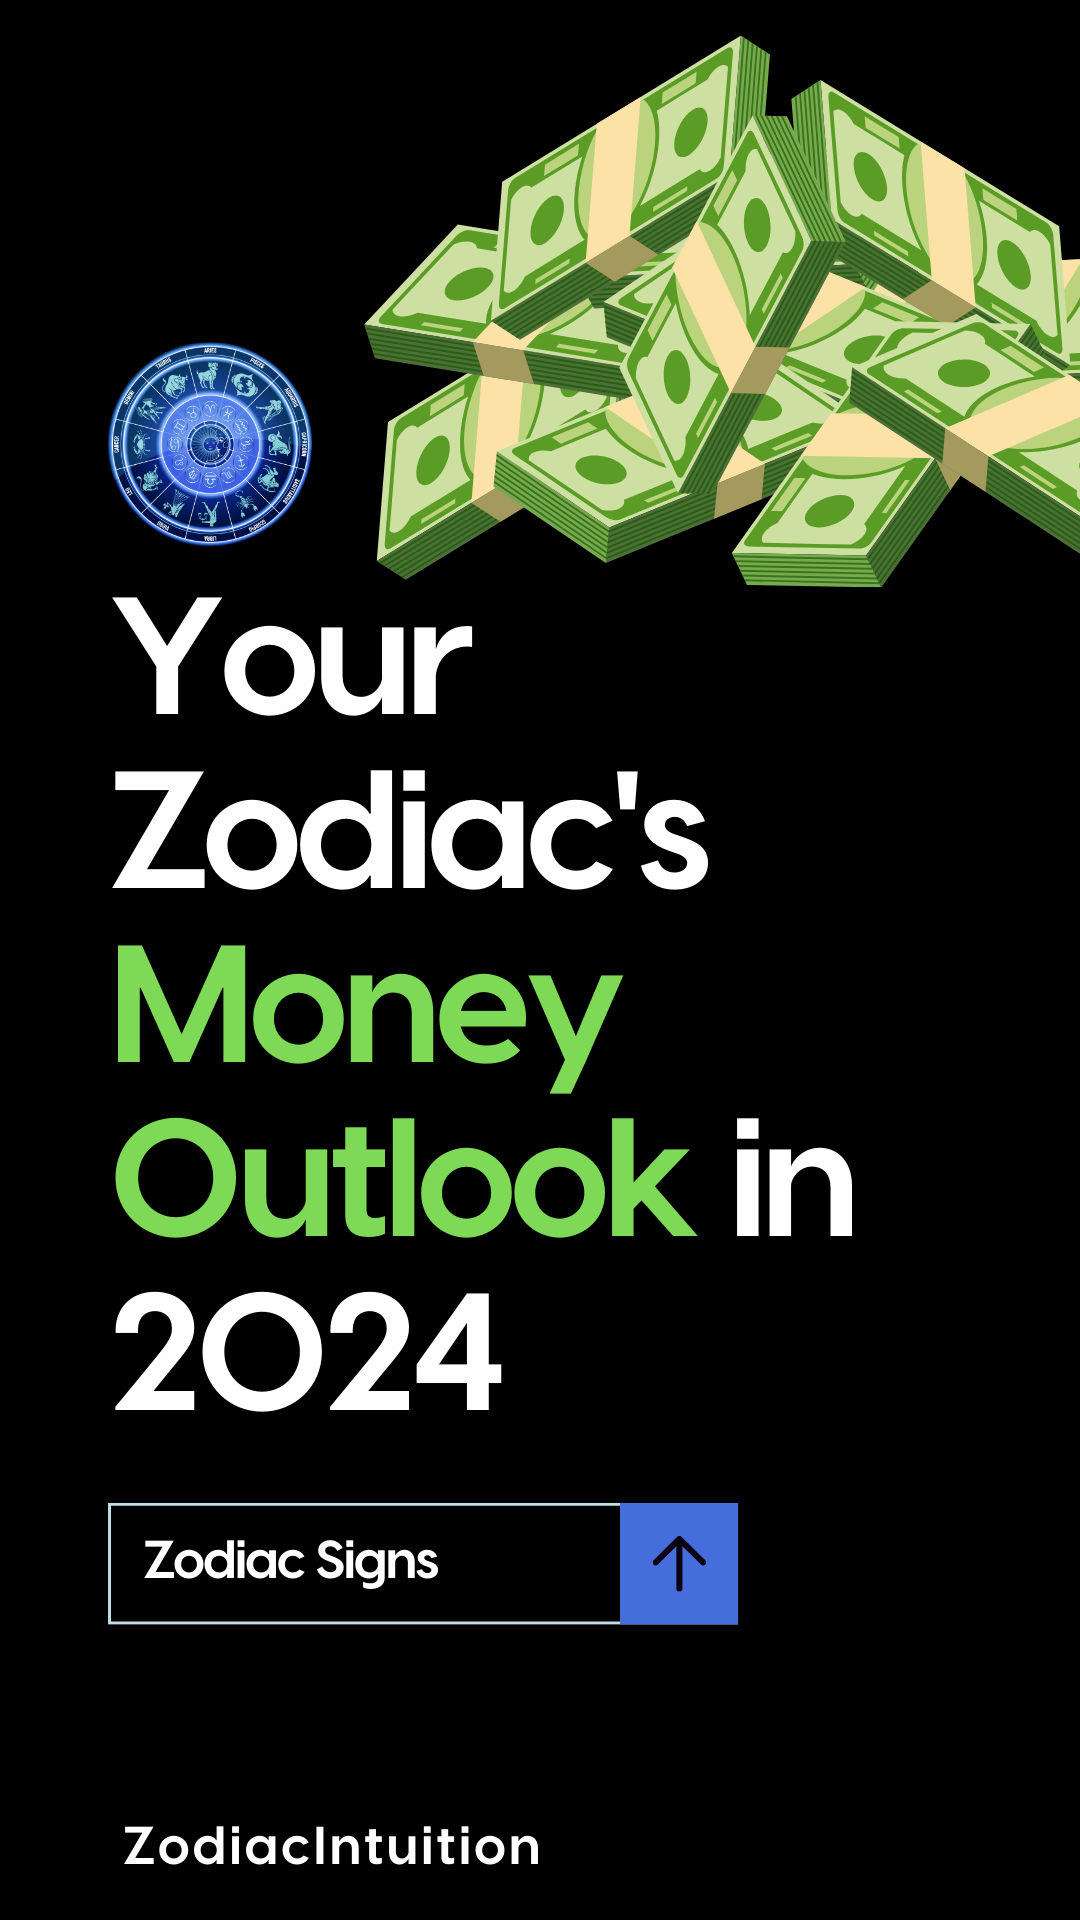 Your Zodiac's Money Outlook in 2024